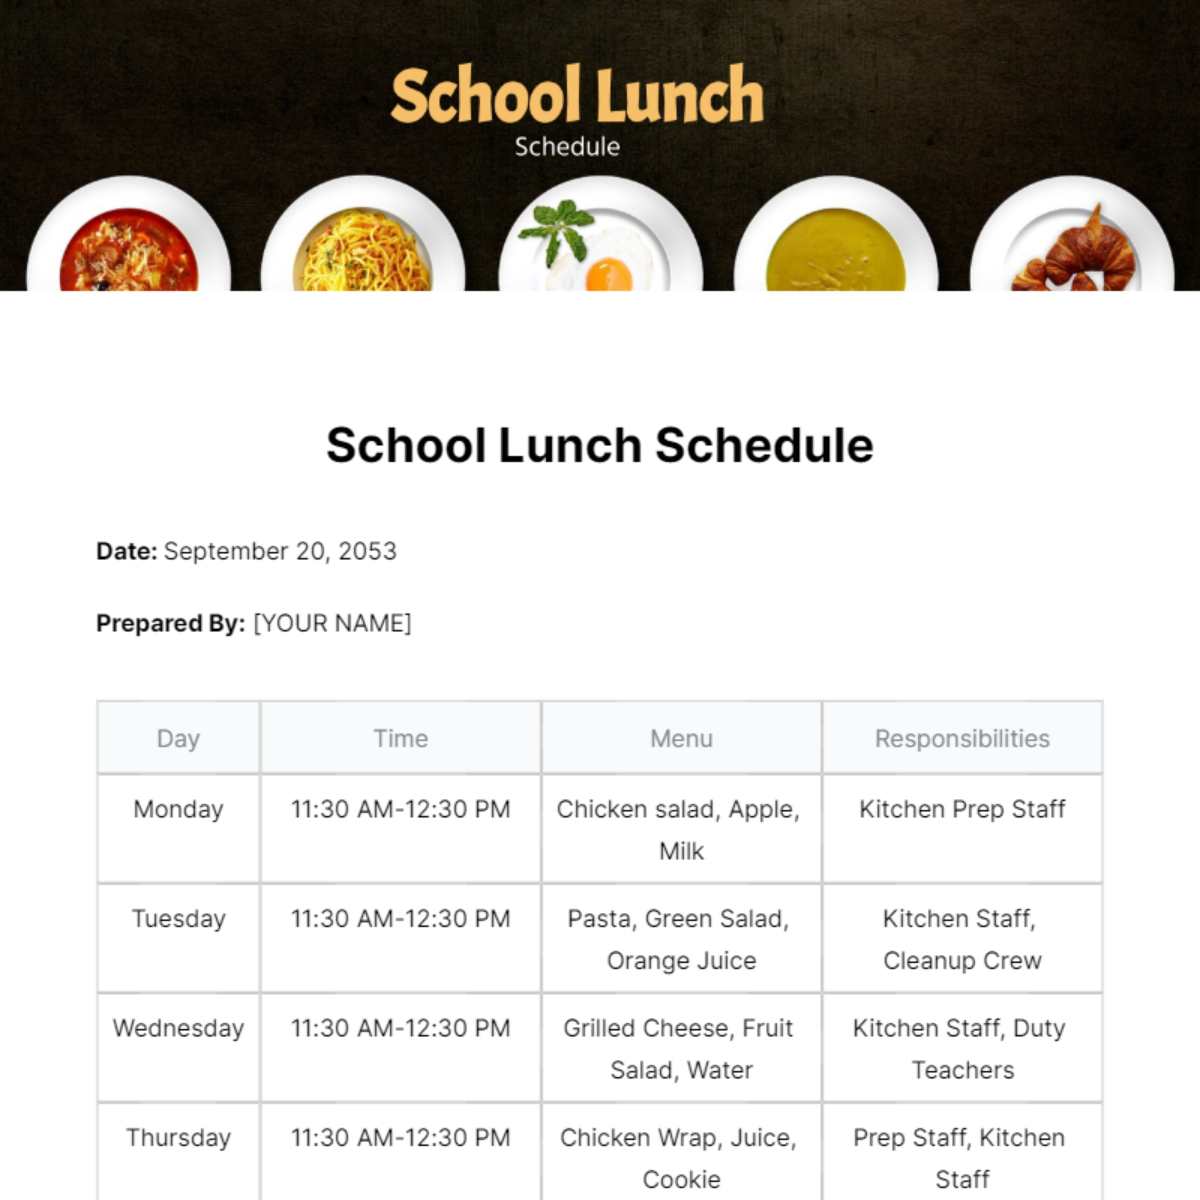 School Lunch Schedule Template